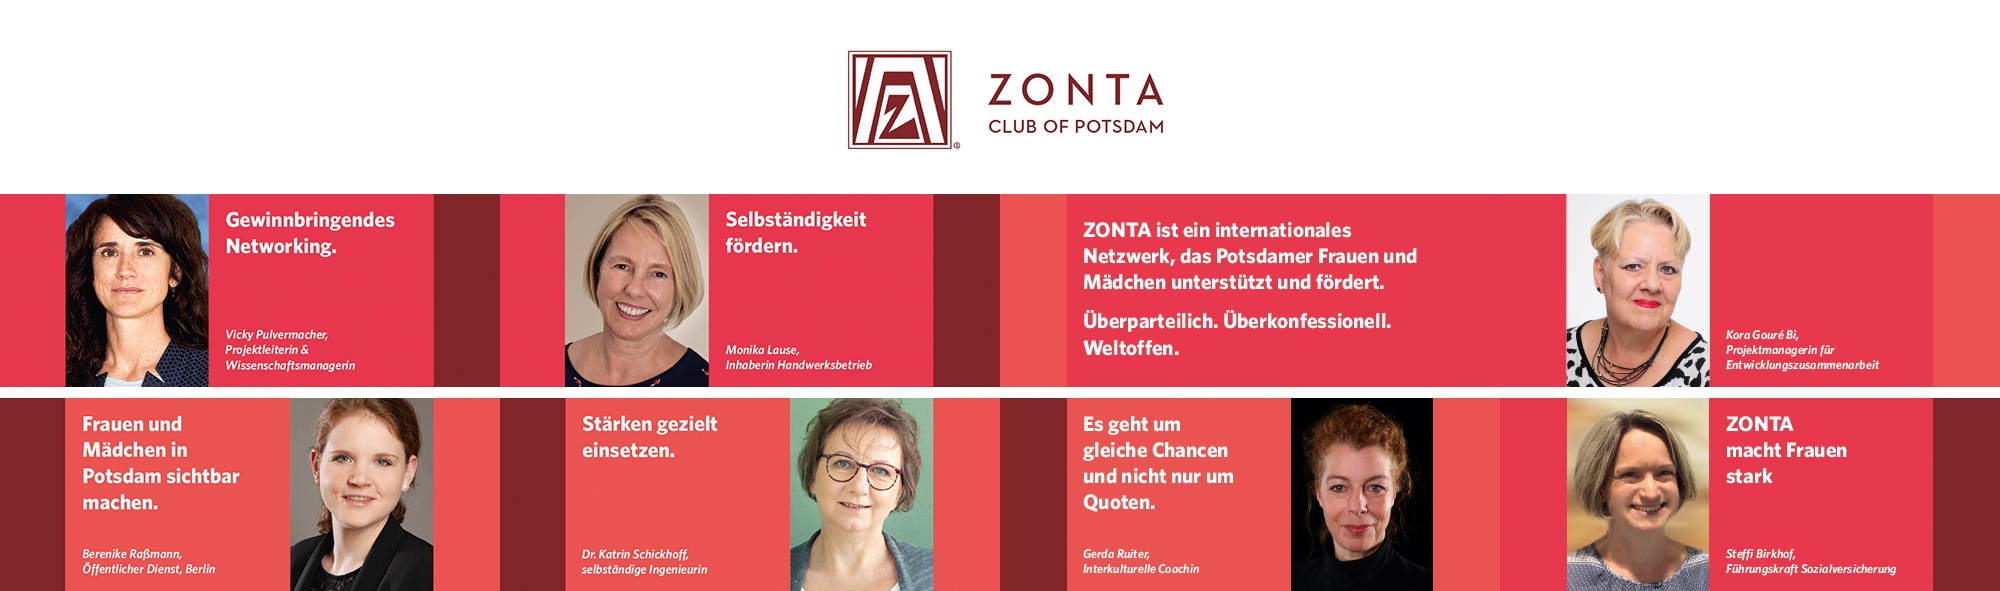 2020-09 Zonta Club Potsdam_Zitate-Fotos